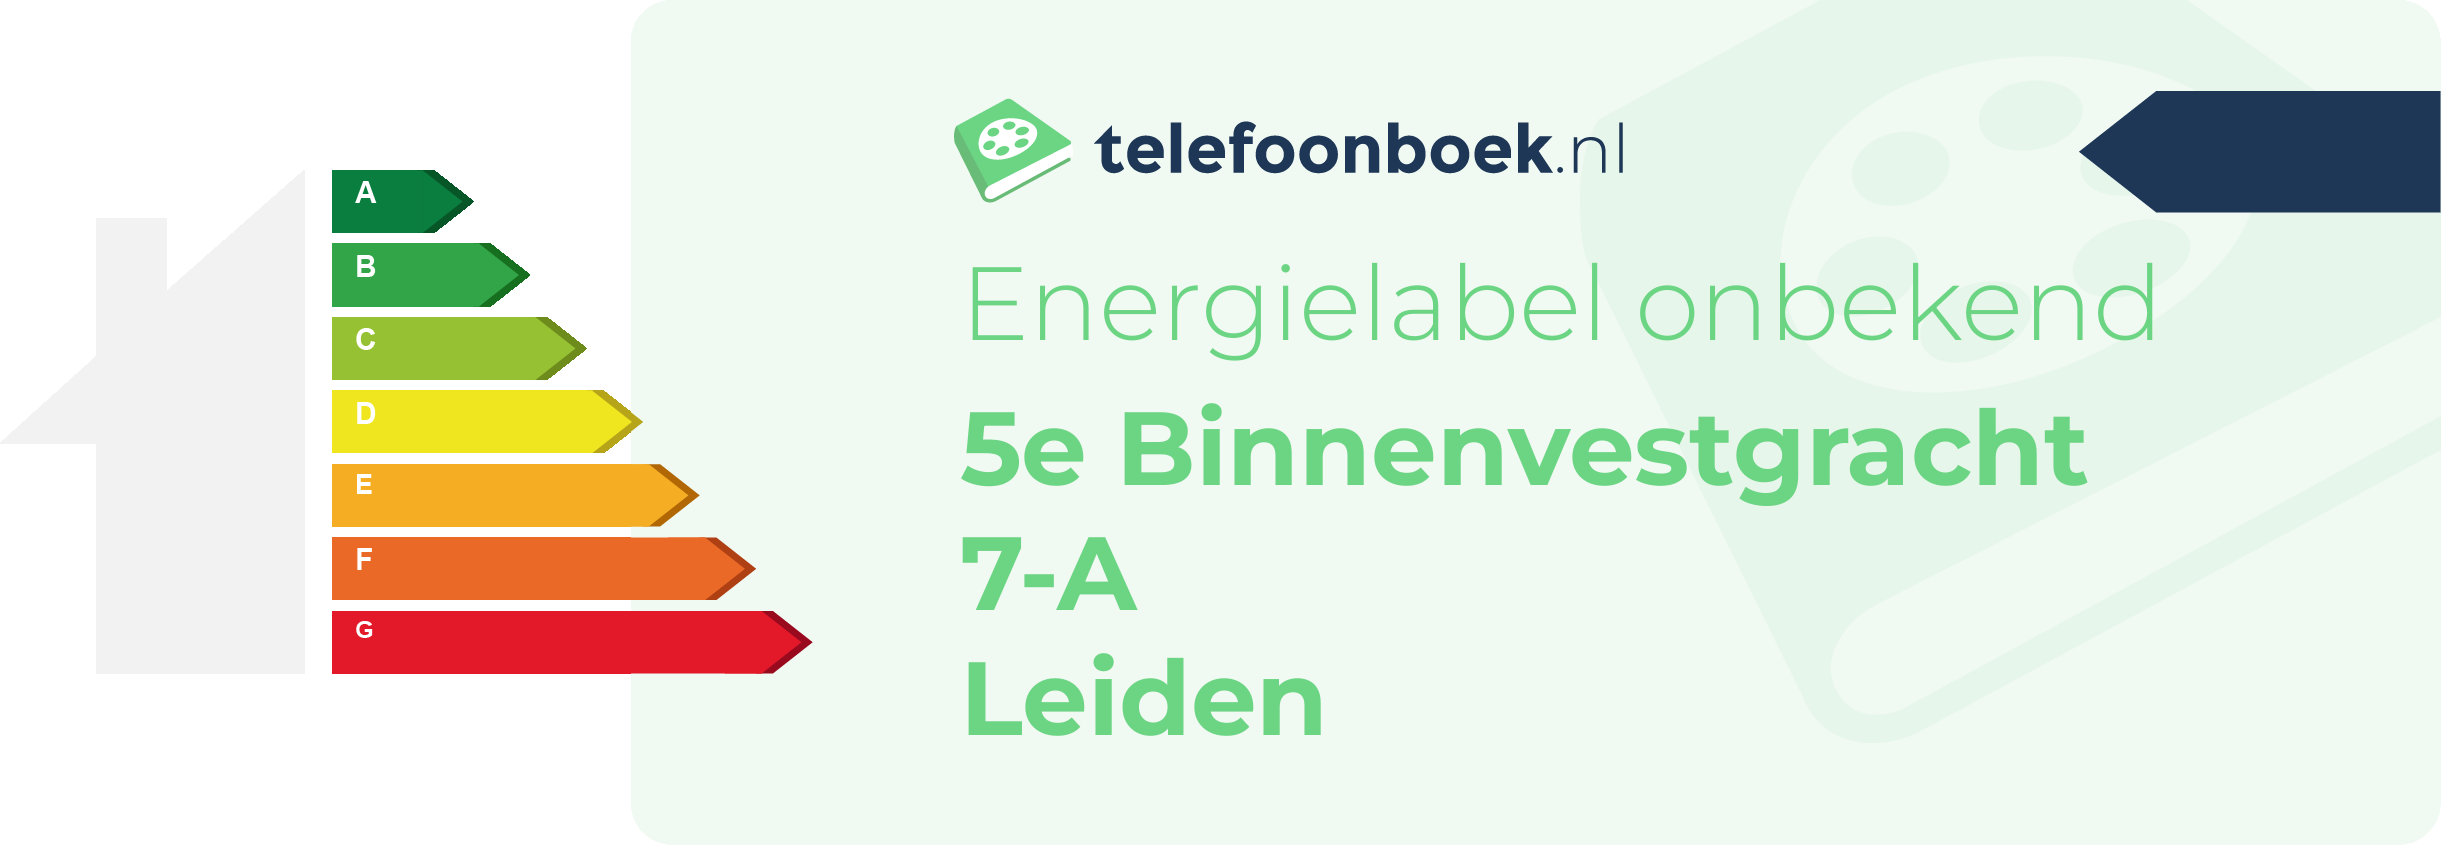 Energielabel 5e Binnenvestgracht 7-A Leiden